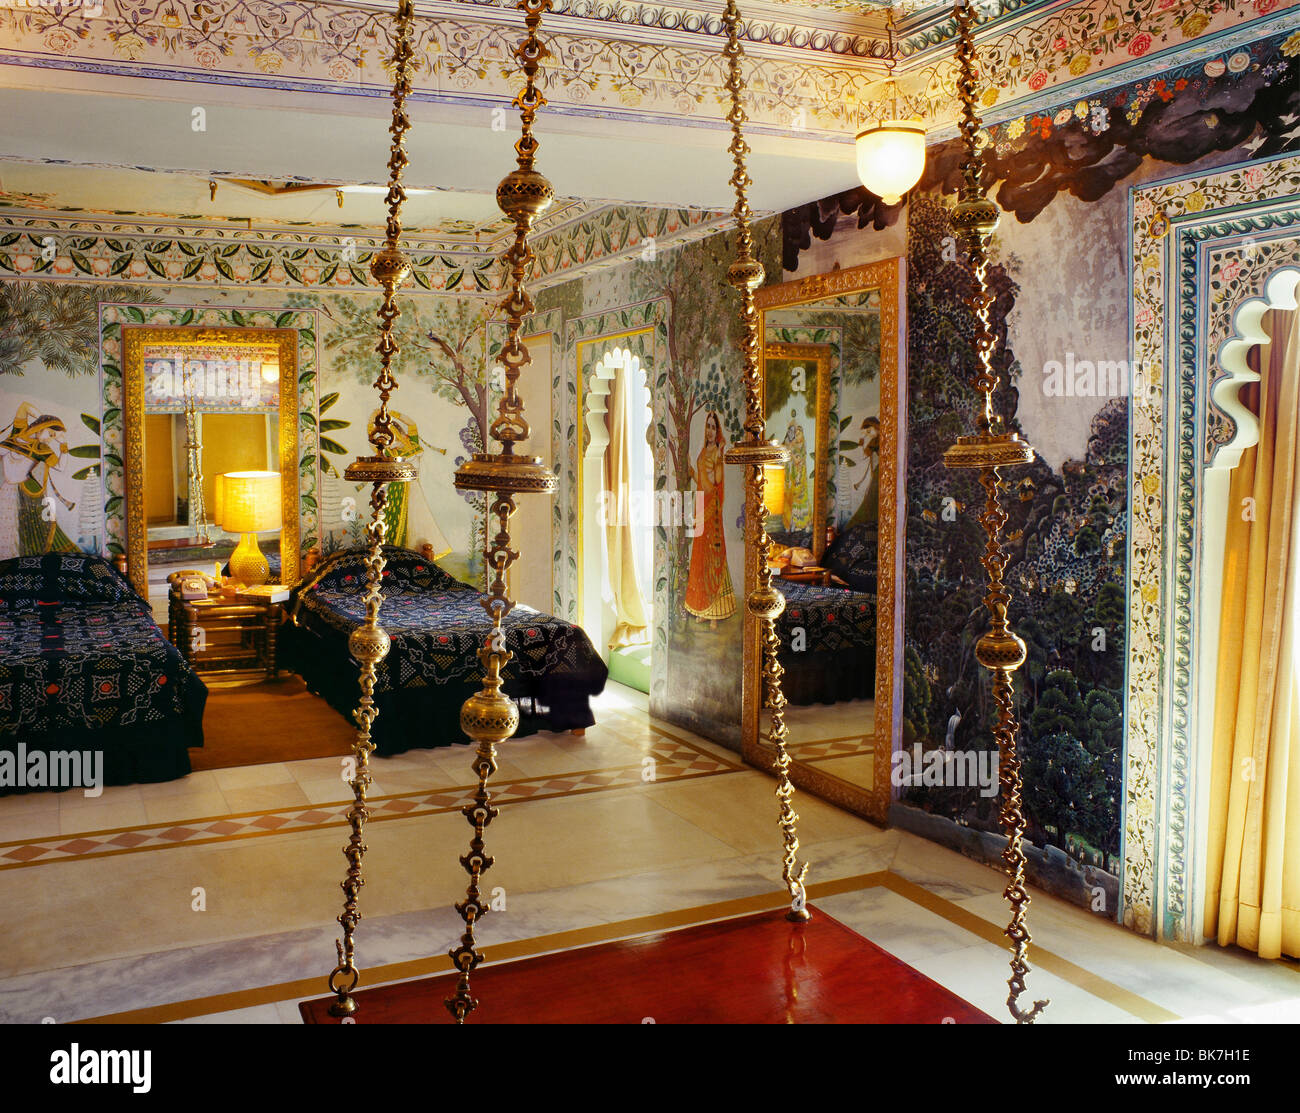 Rajasthani Style Interior Design Ideas, Palace Interiors, Decoration